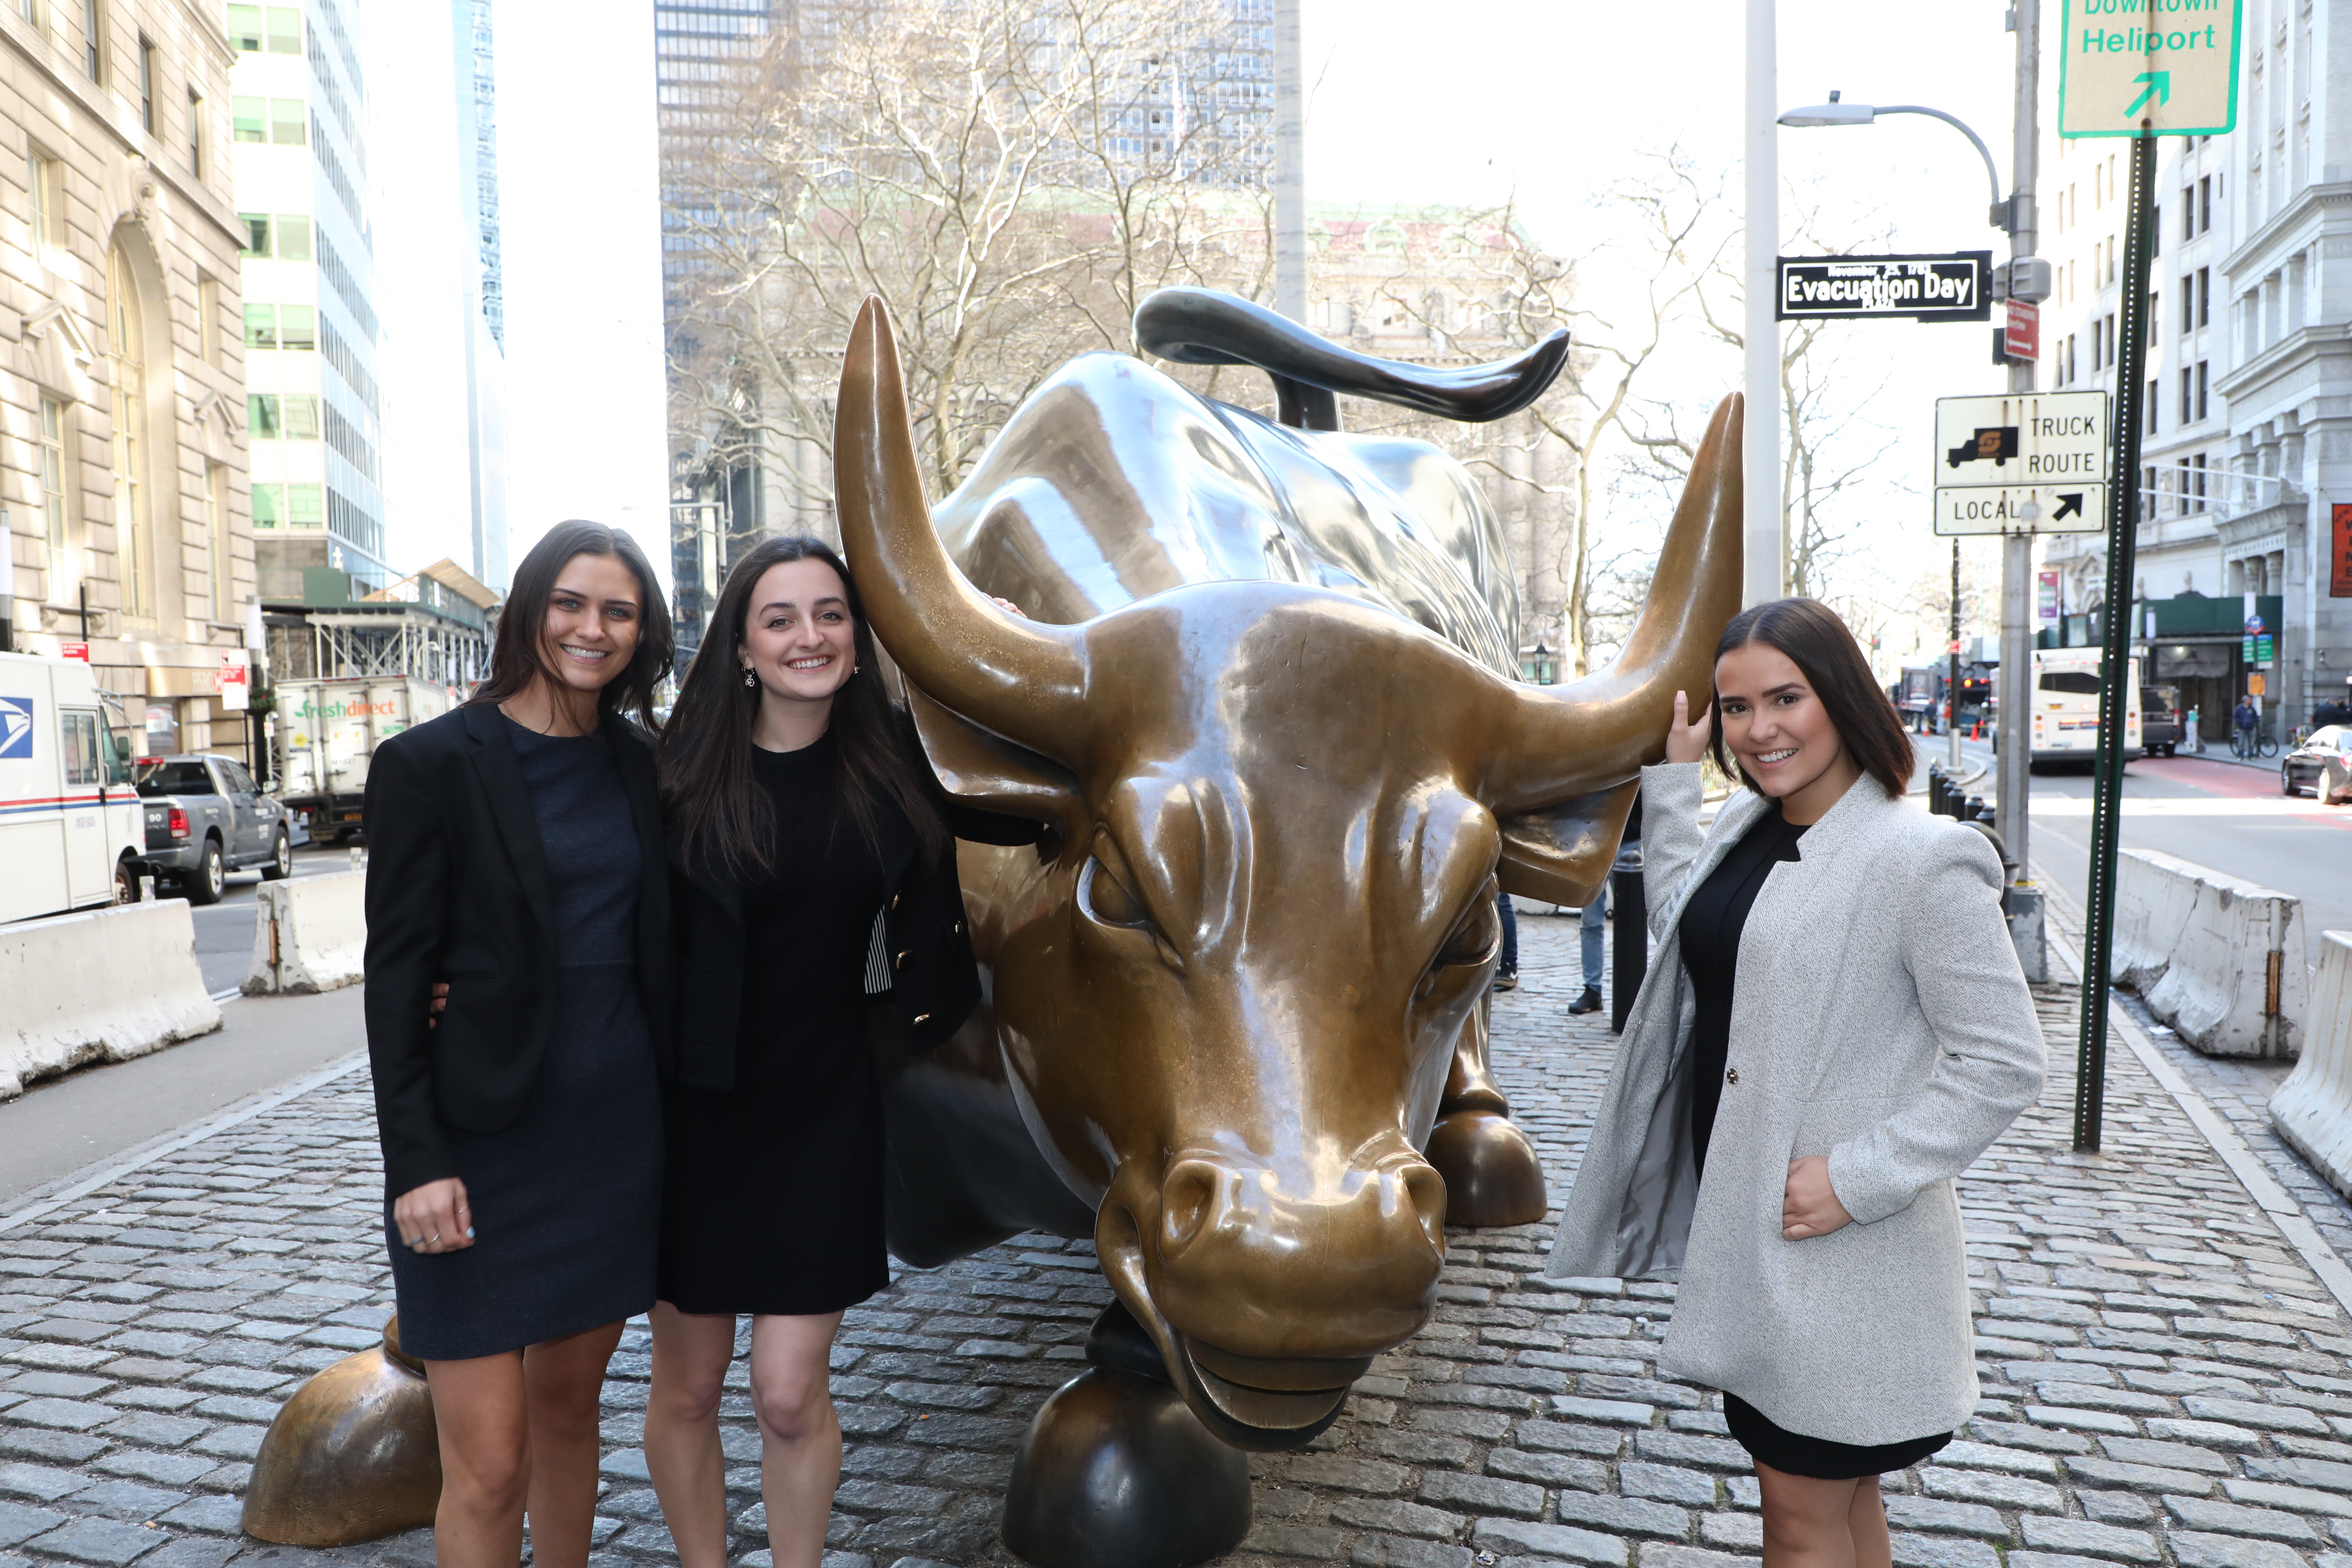 Wall Street Scholars next to the Wall Street Bull